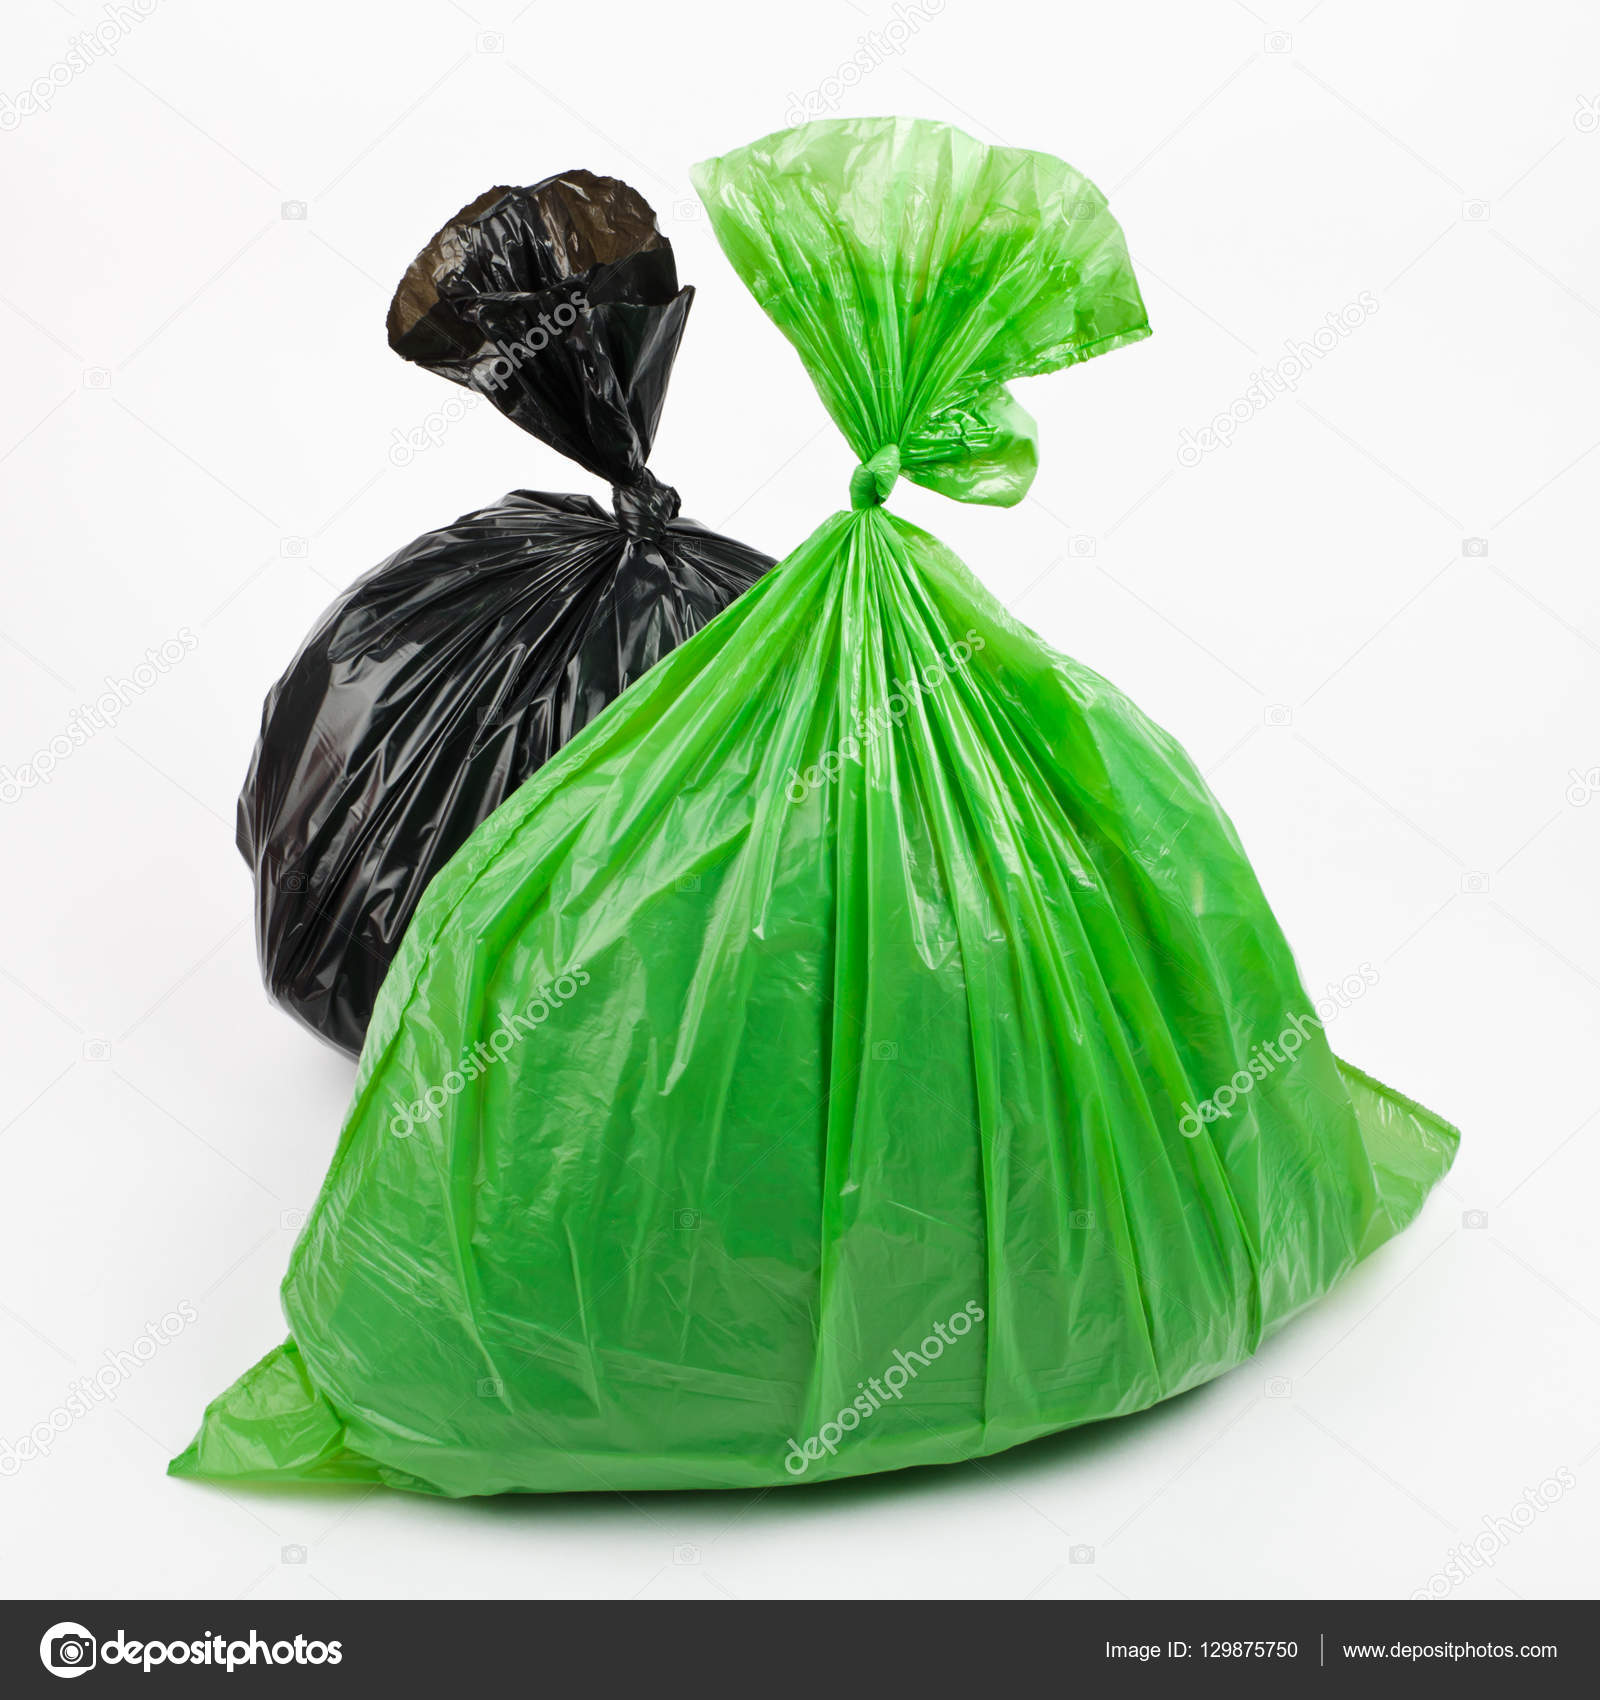 https://st3.depositphotos.com/1363473/12987/i/1600/depositphotos_129875750-stock-photo-green-and-black-garbage-bags.jpg